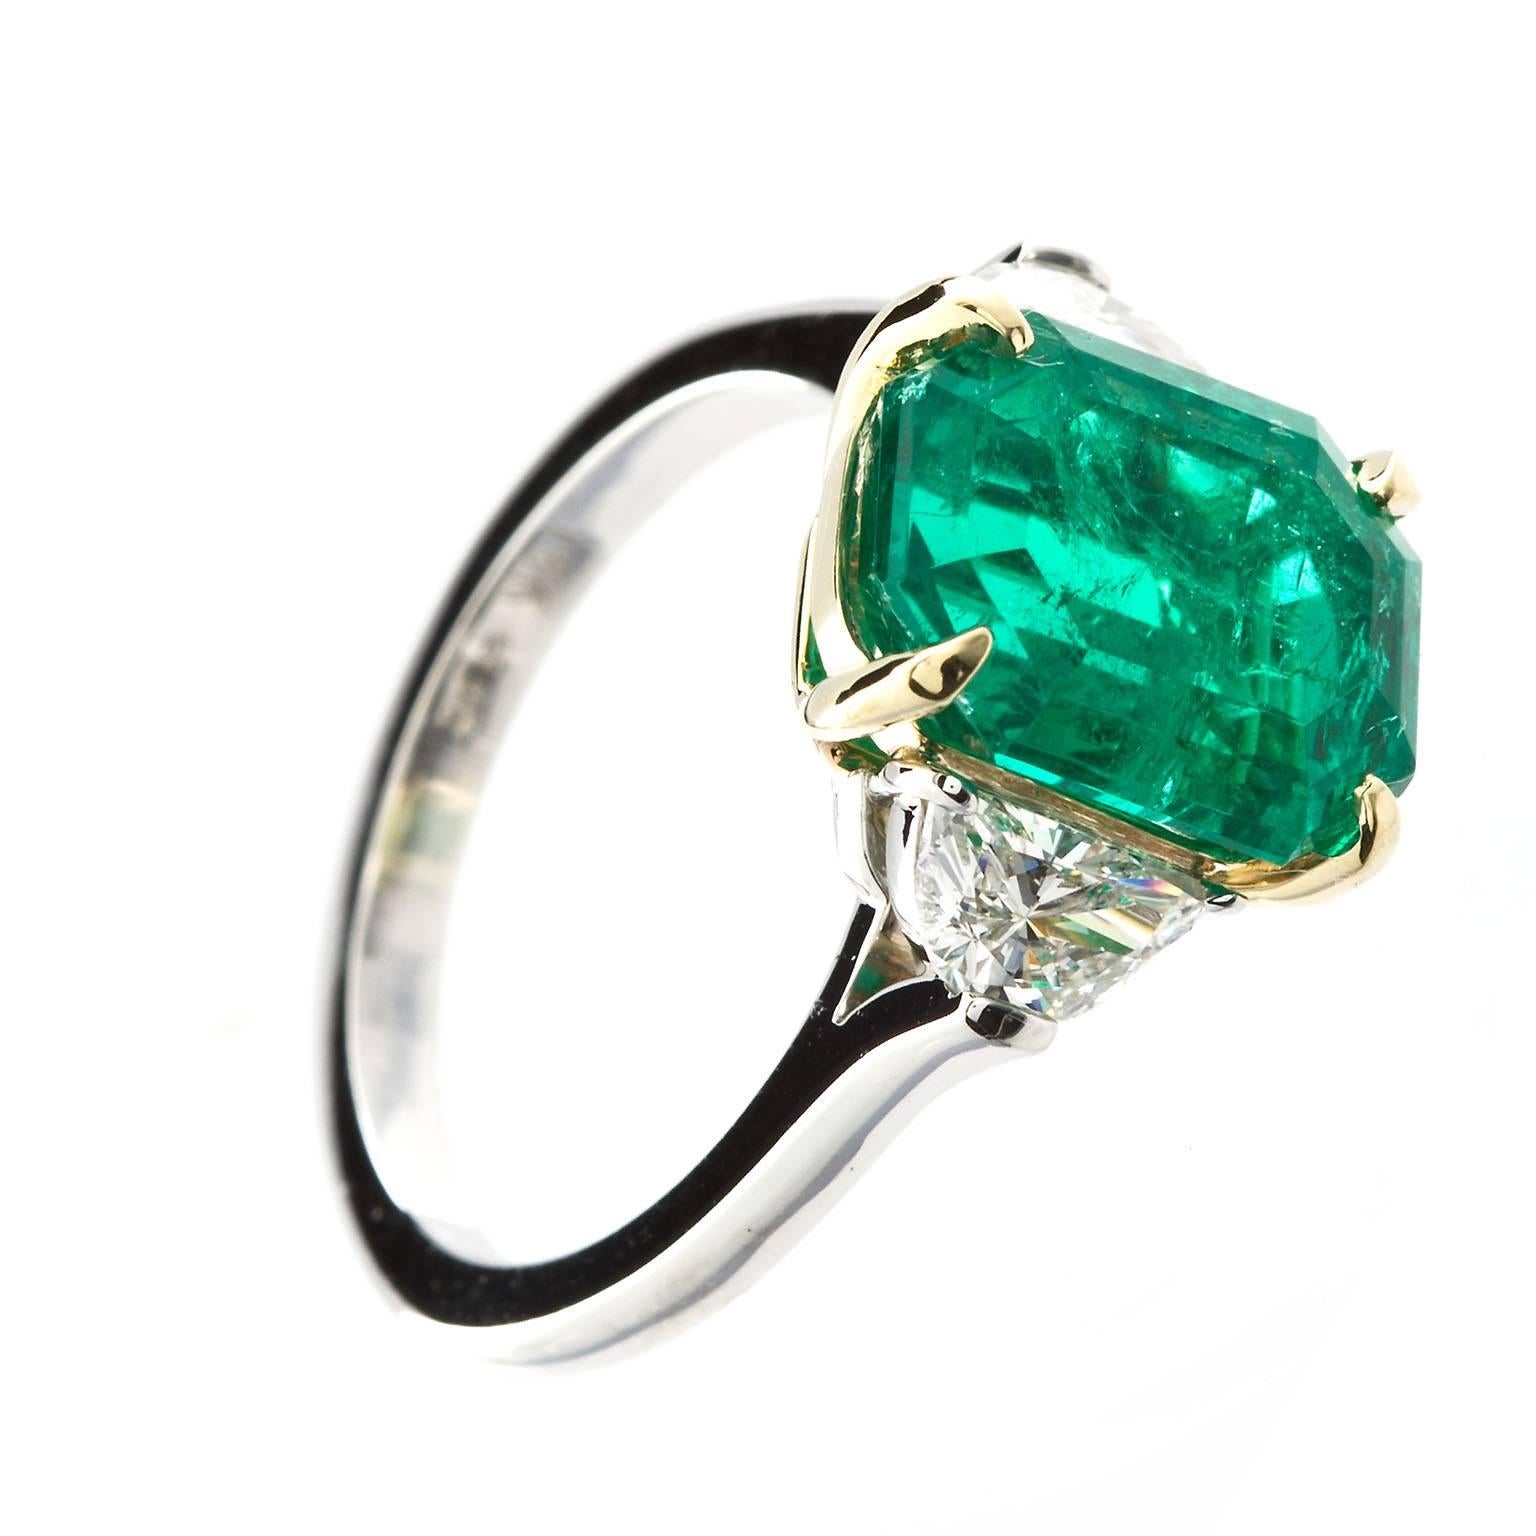 Emerald Cut 4.31 Carat Colombian Emerald Engagement Ring